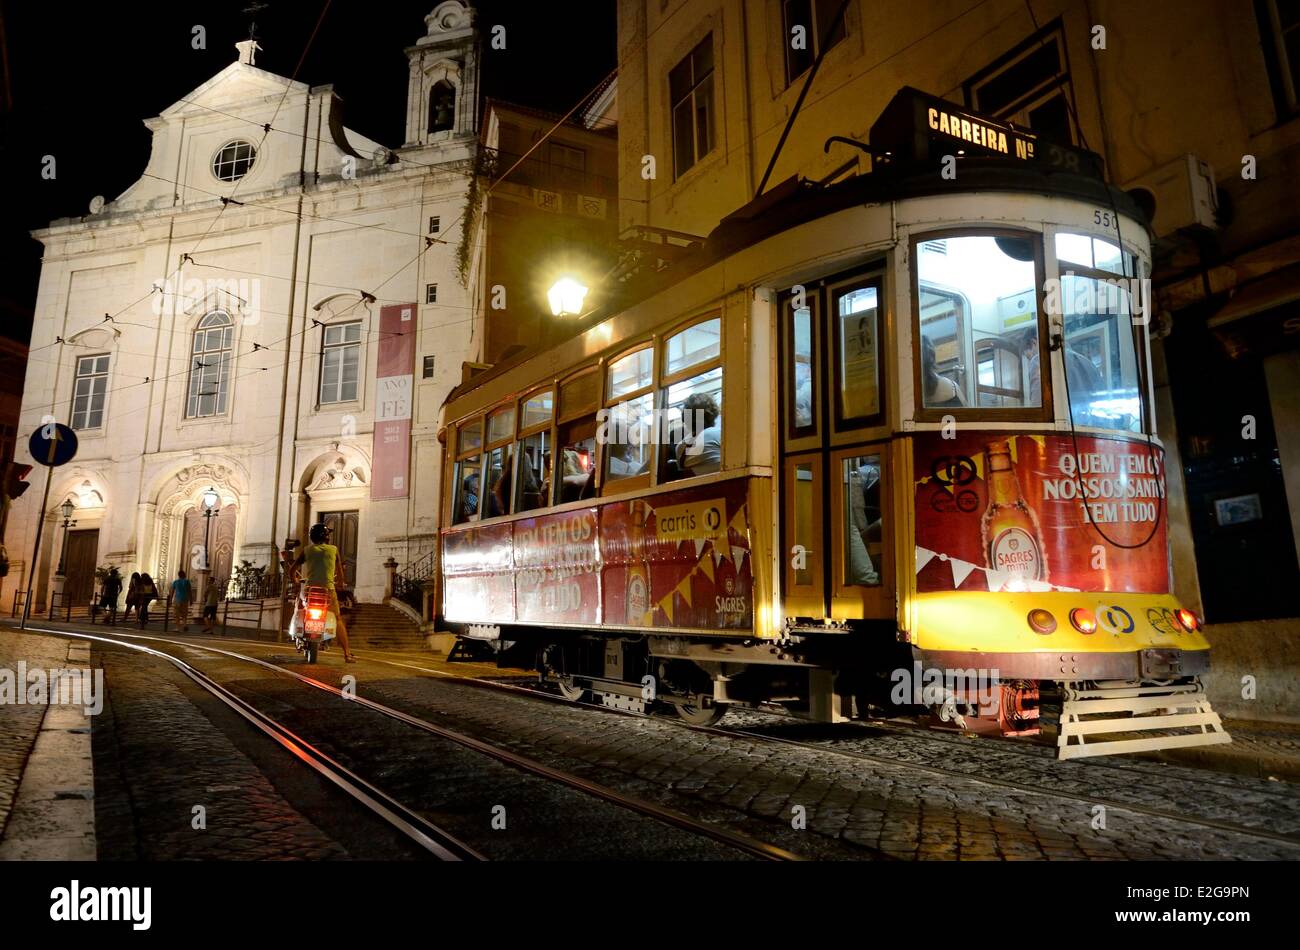 Portugal Lisbon Baixa pombalin district tram in the rua da Conceicao at night Stock Photo